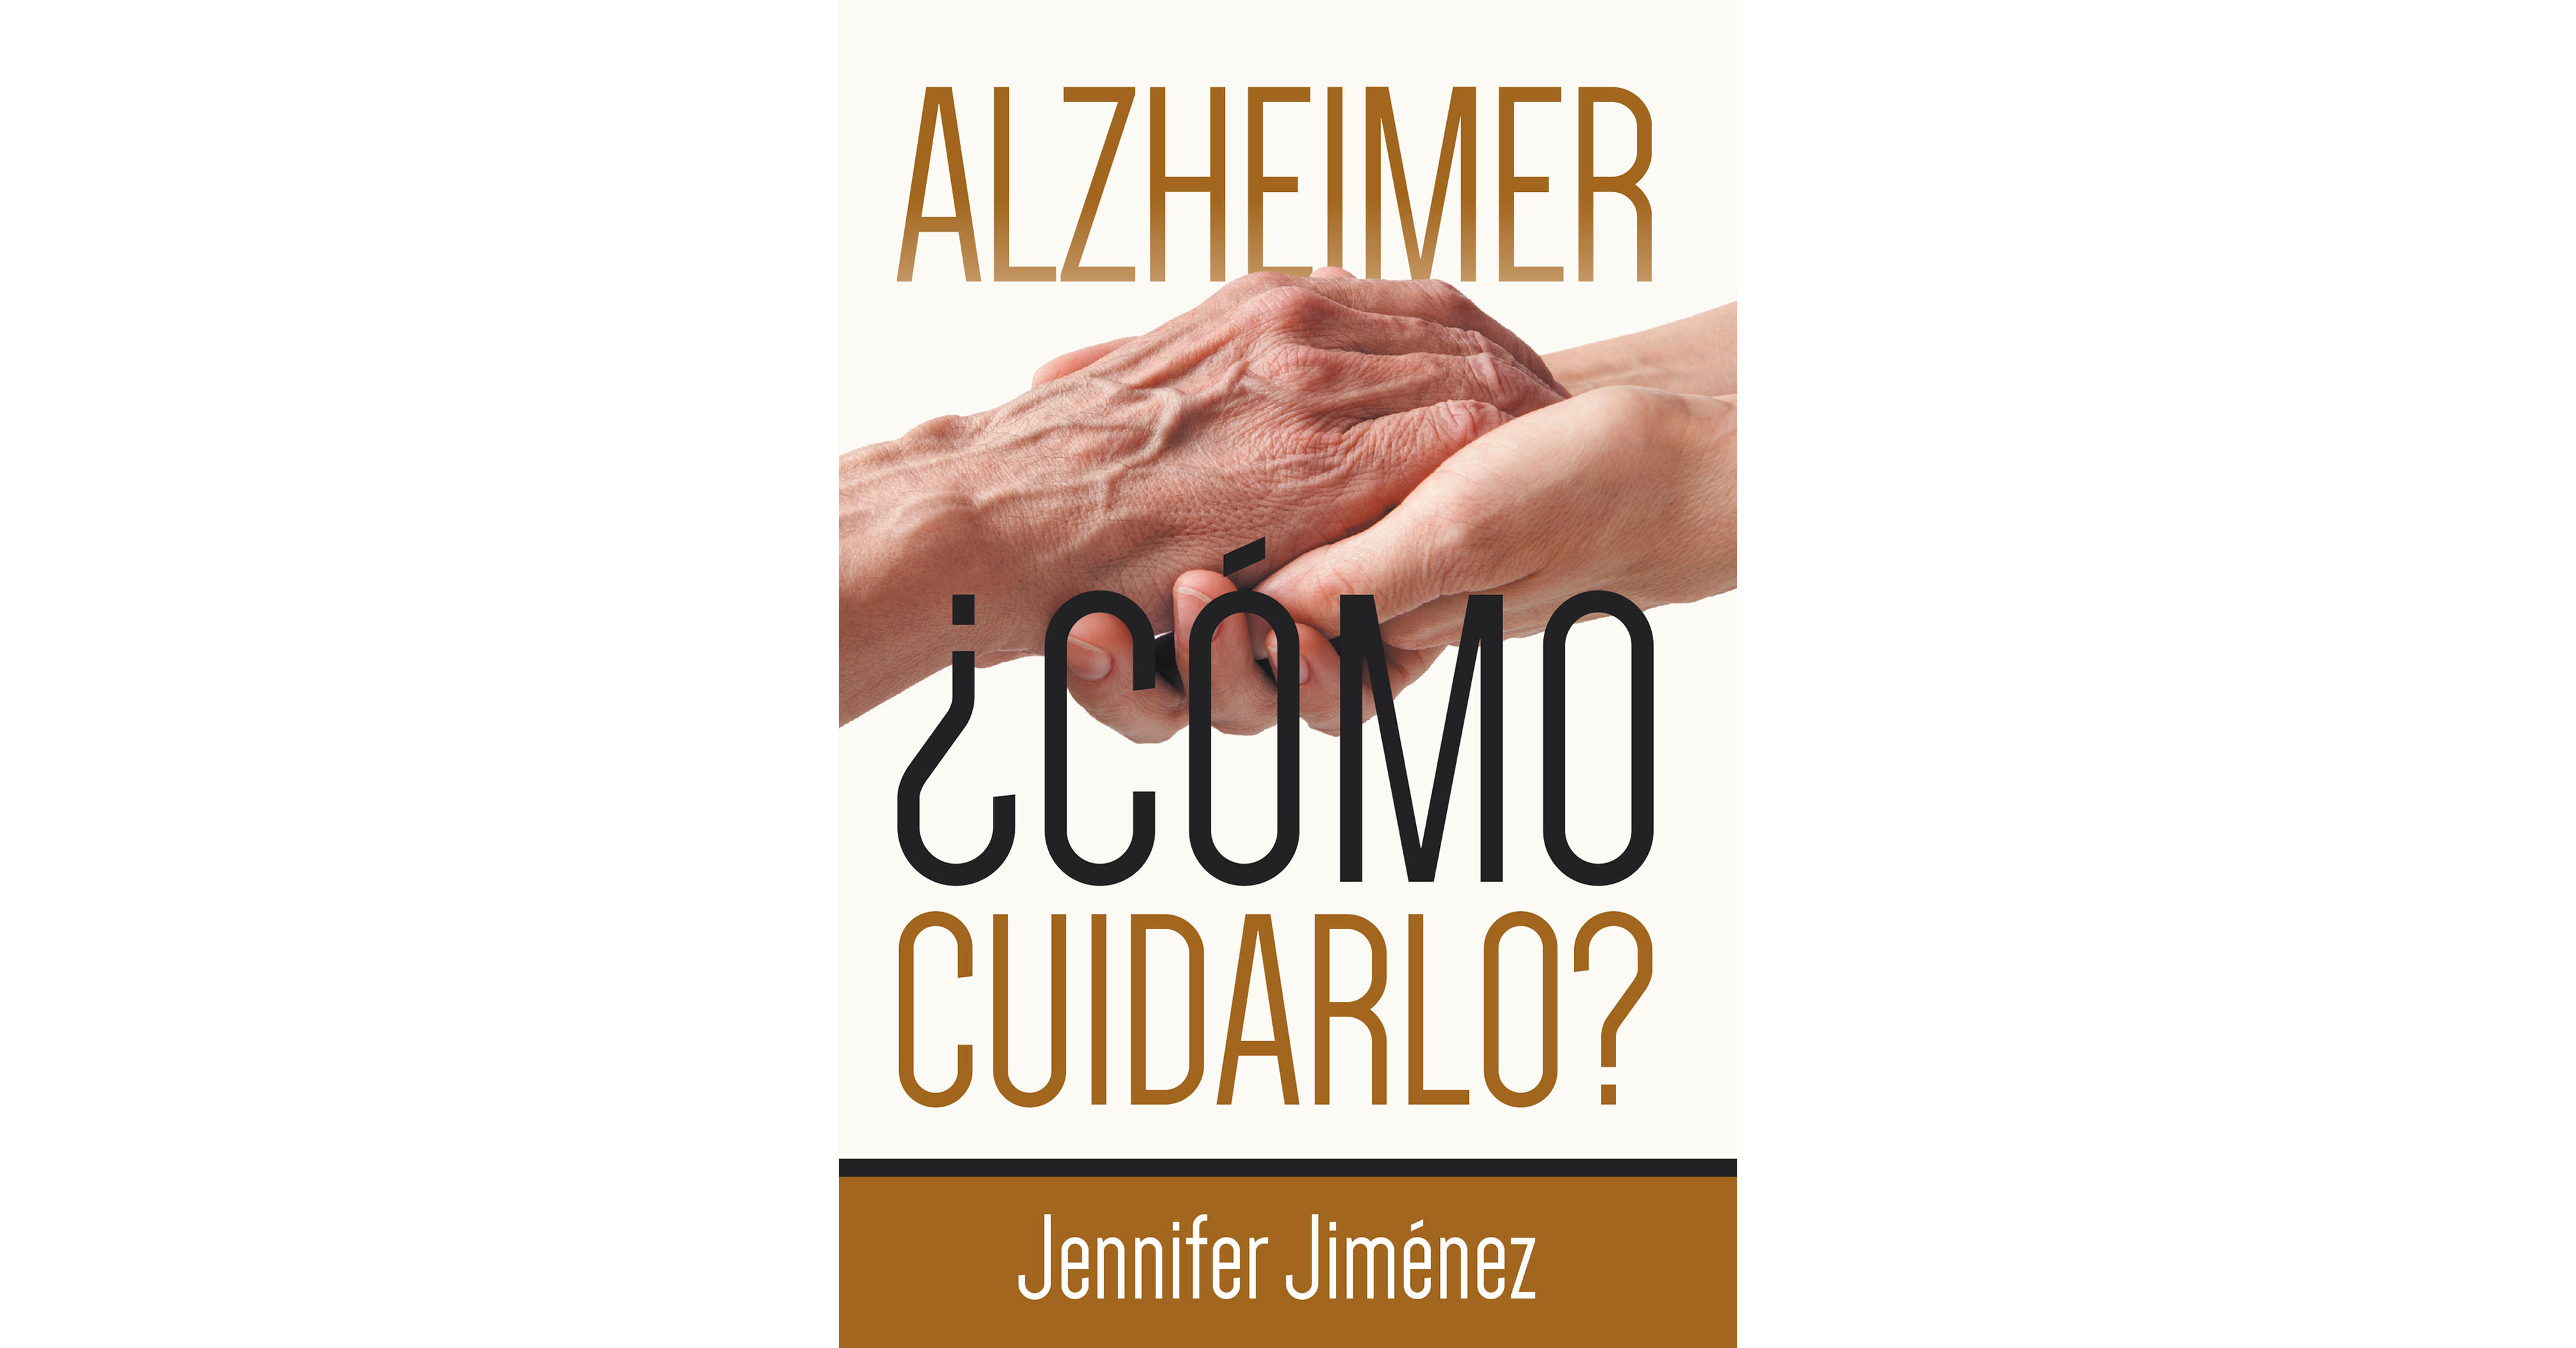 Jennifer Jiménez's New Book Alzheimer: ¿Cómo Cuidarlo? Is An Insightful ...